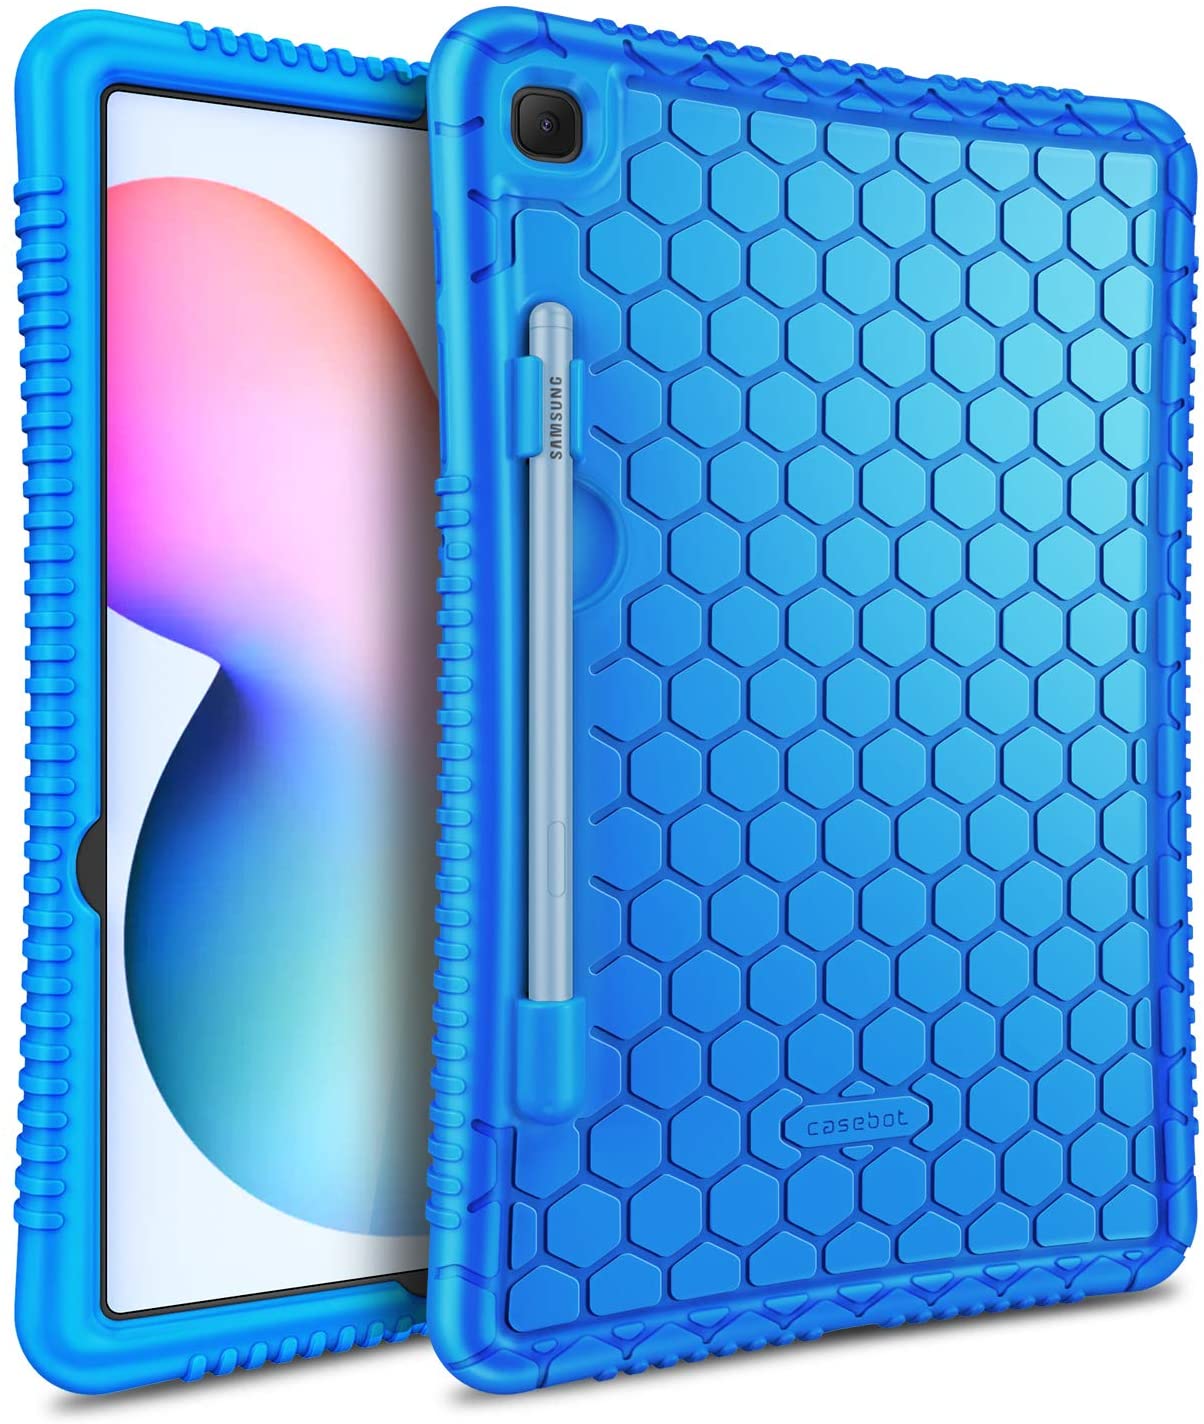 Samsung Galaxy Tab S6 Lite 10.4 Case Silicone Blue